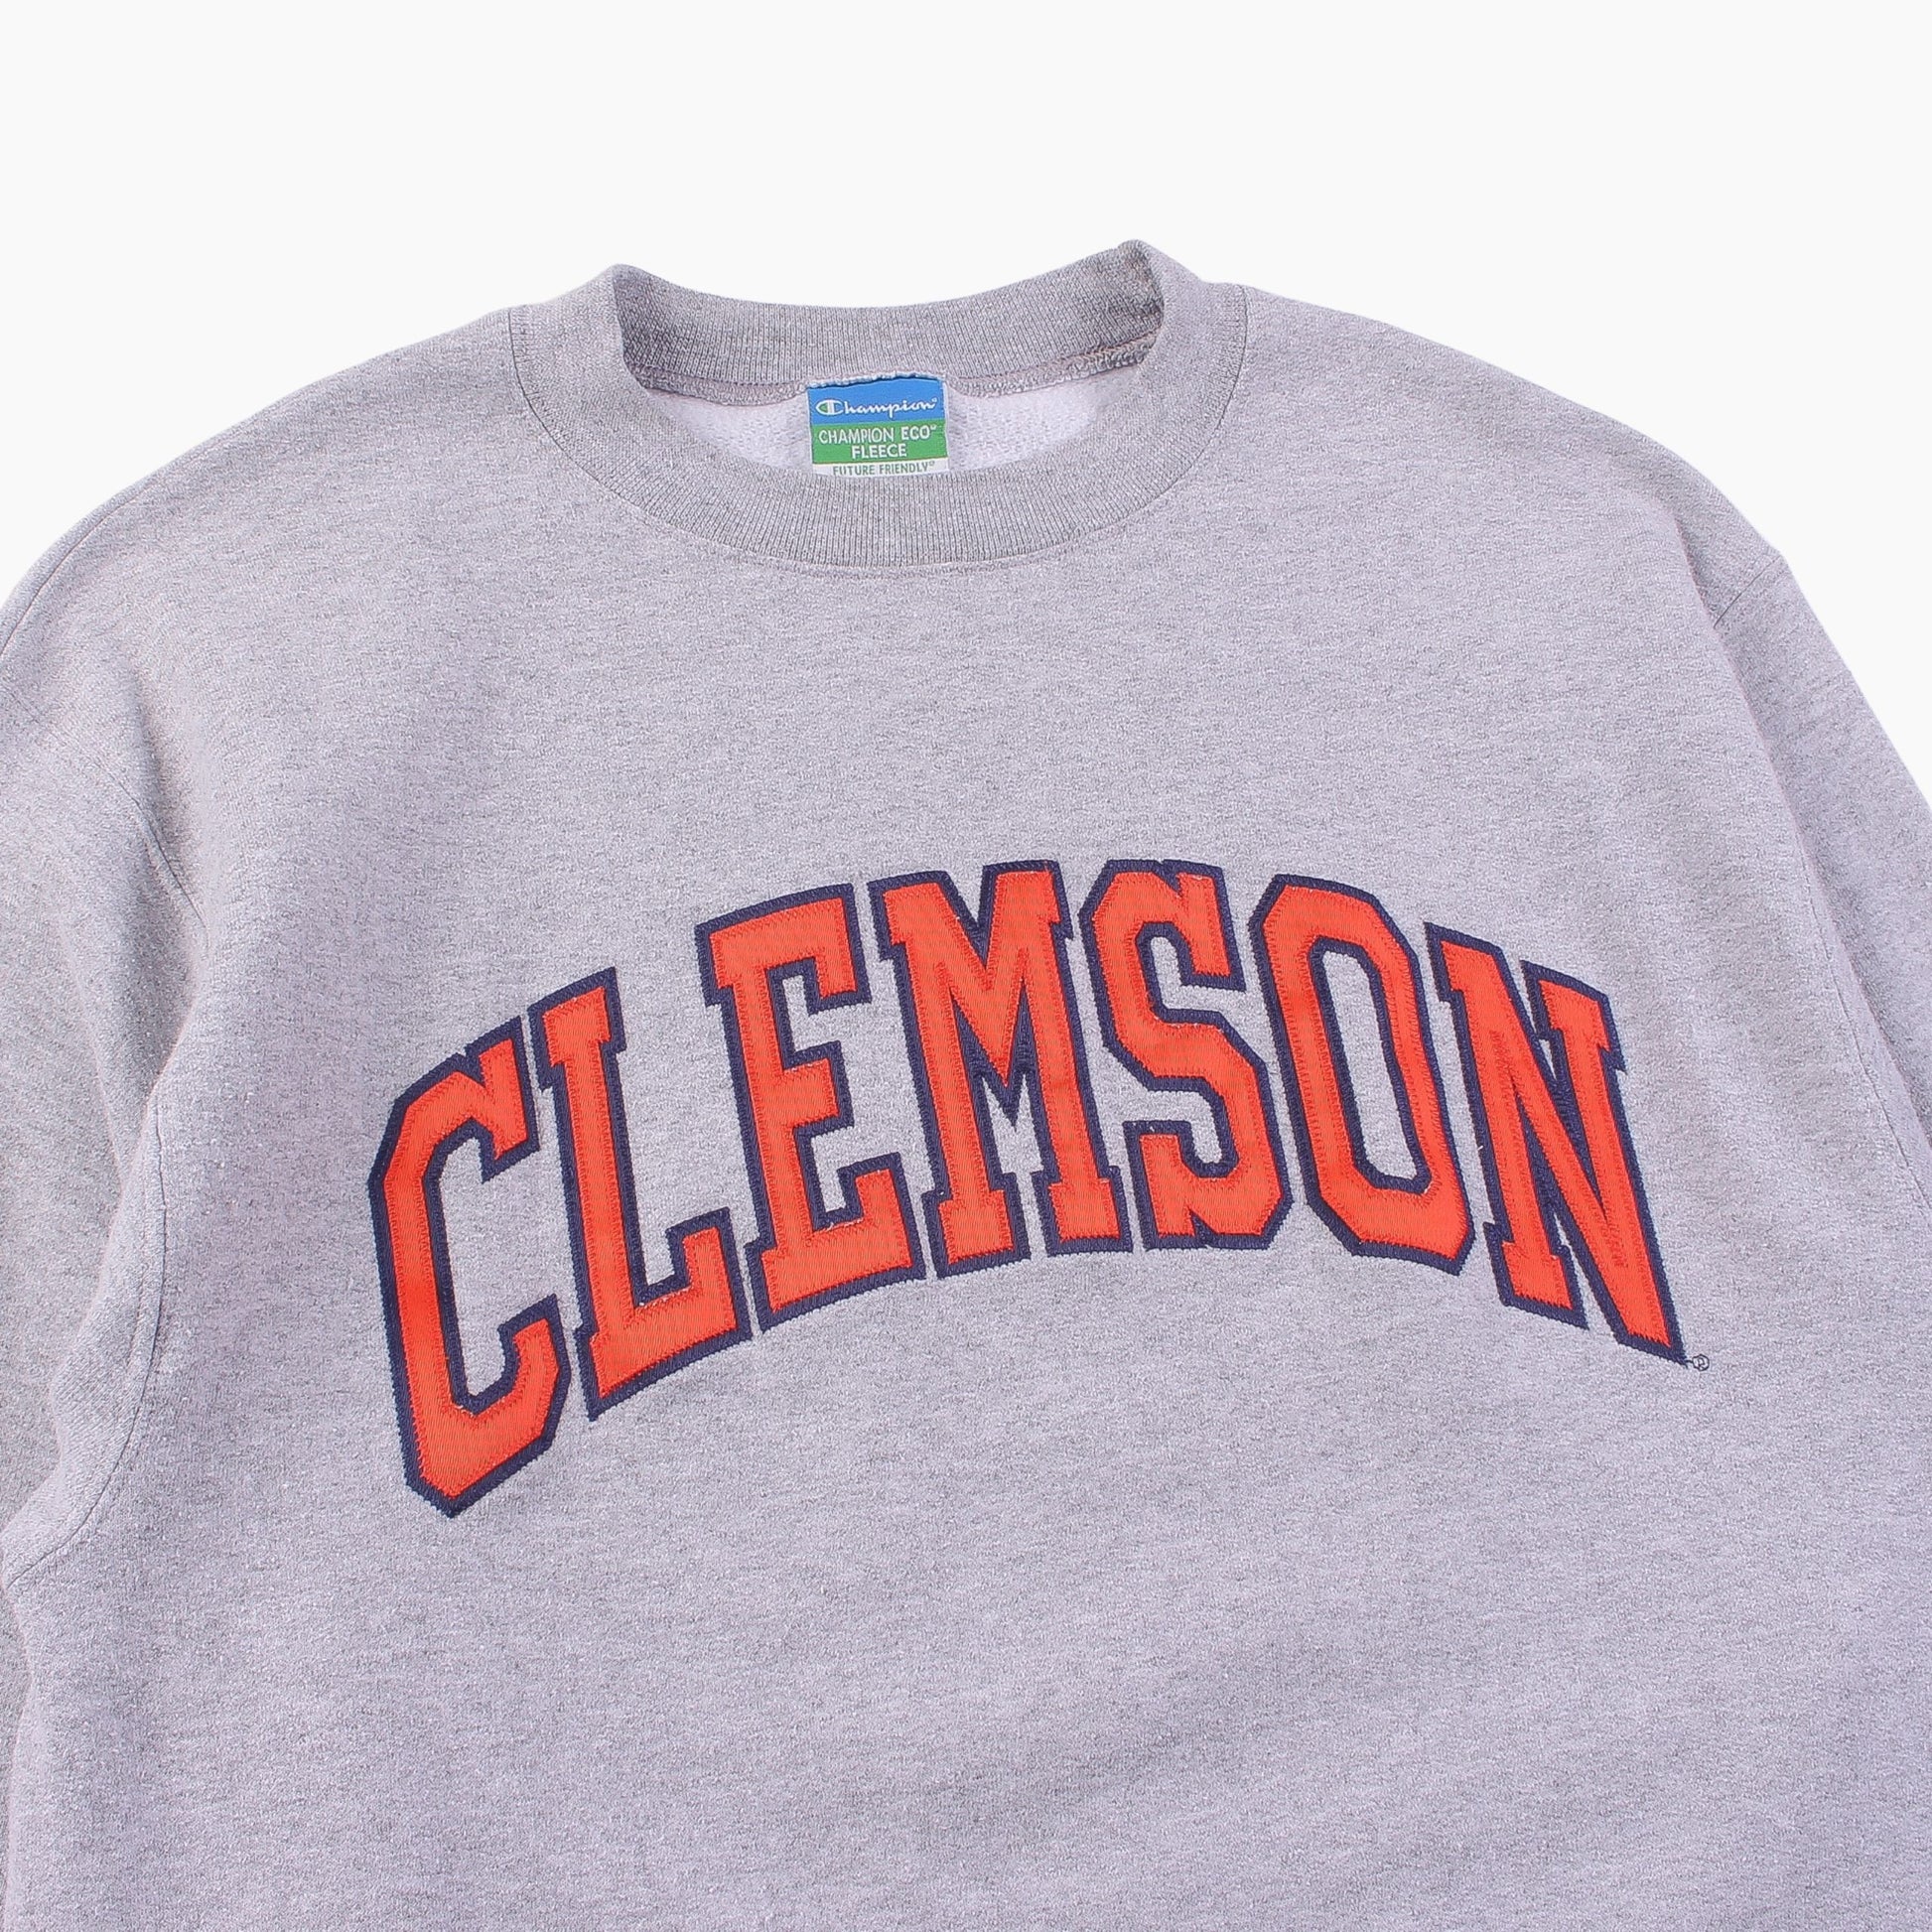 Vintage 'Clemson' Champion Sweatshirt - American Madness